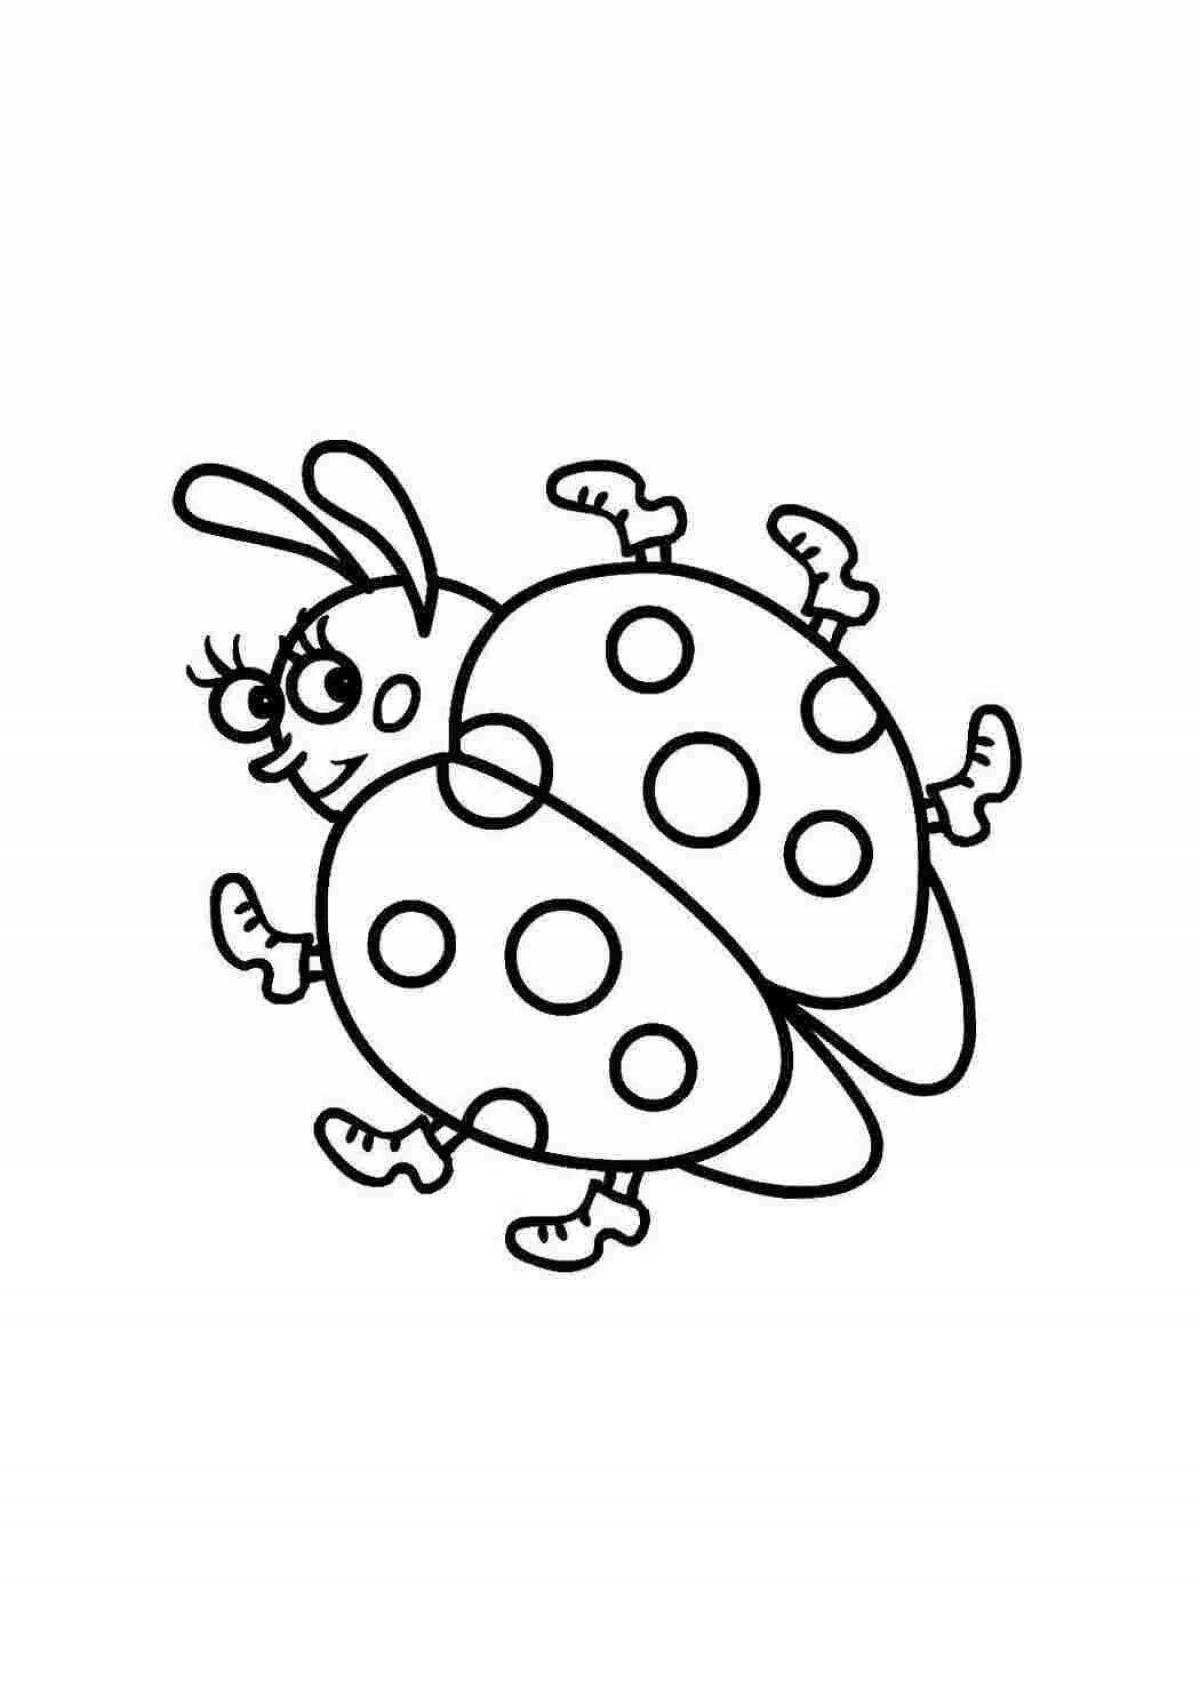 Coloring page magic ladybug